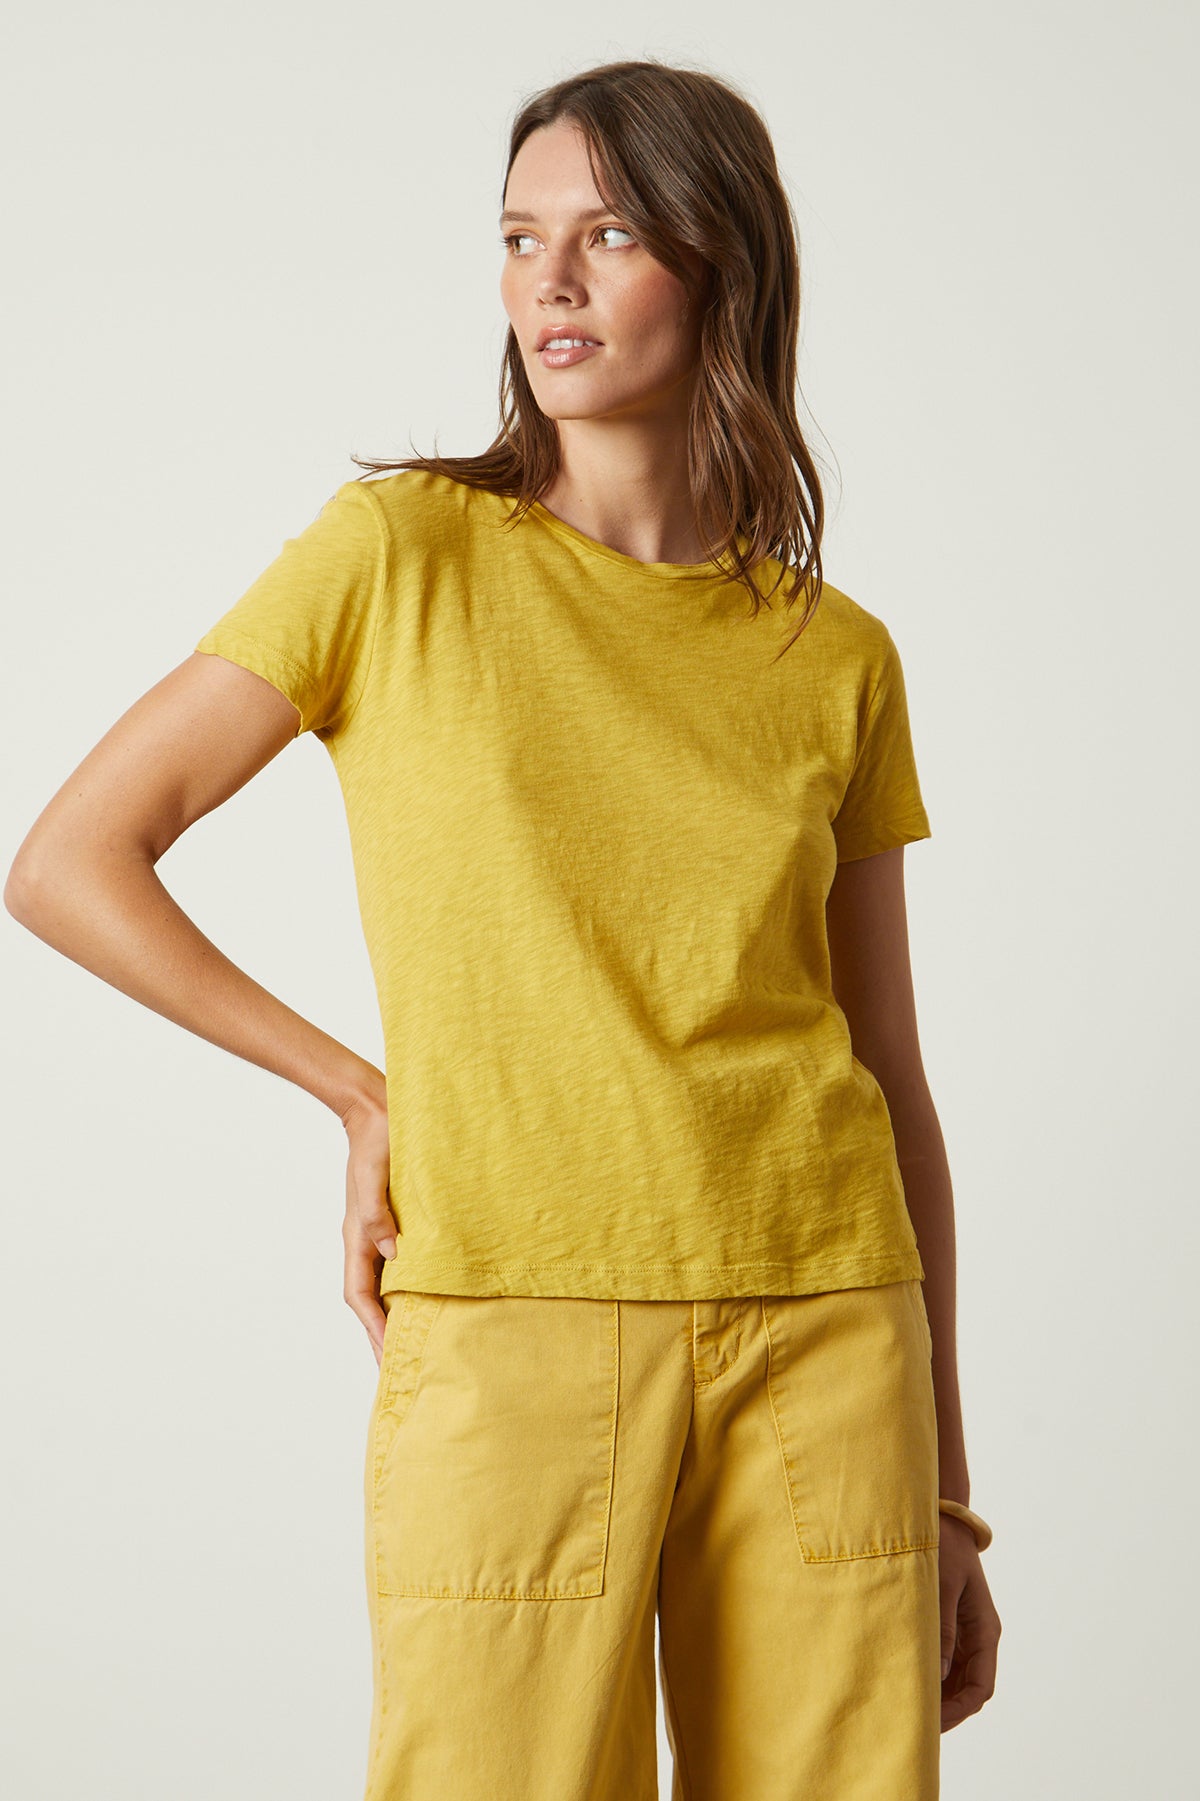 The model is wearing a yellow Velvet by Graham & Spencer SIERRA CREW NECK TEE.-26022866550977